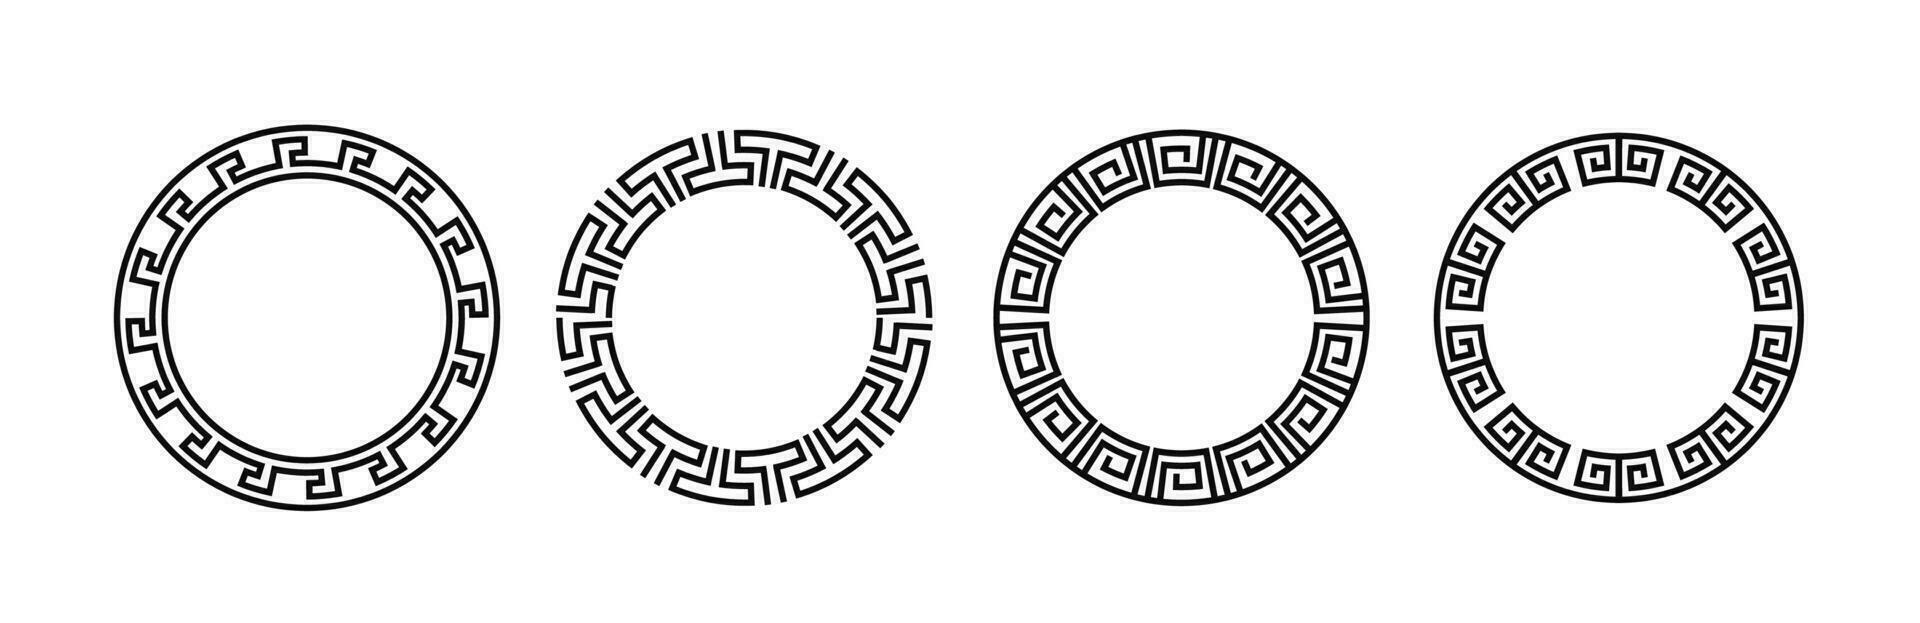 Greek circle frame vector design. Circle border rome